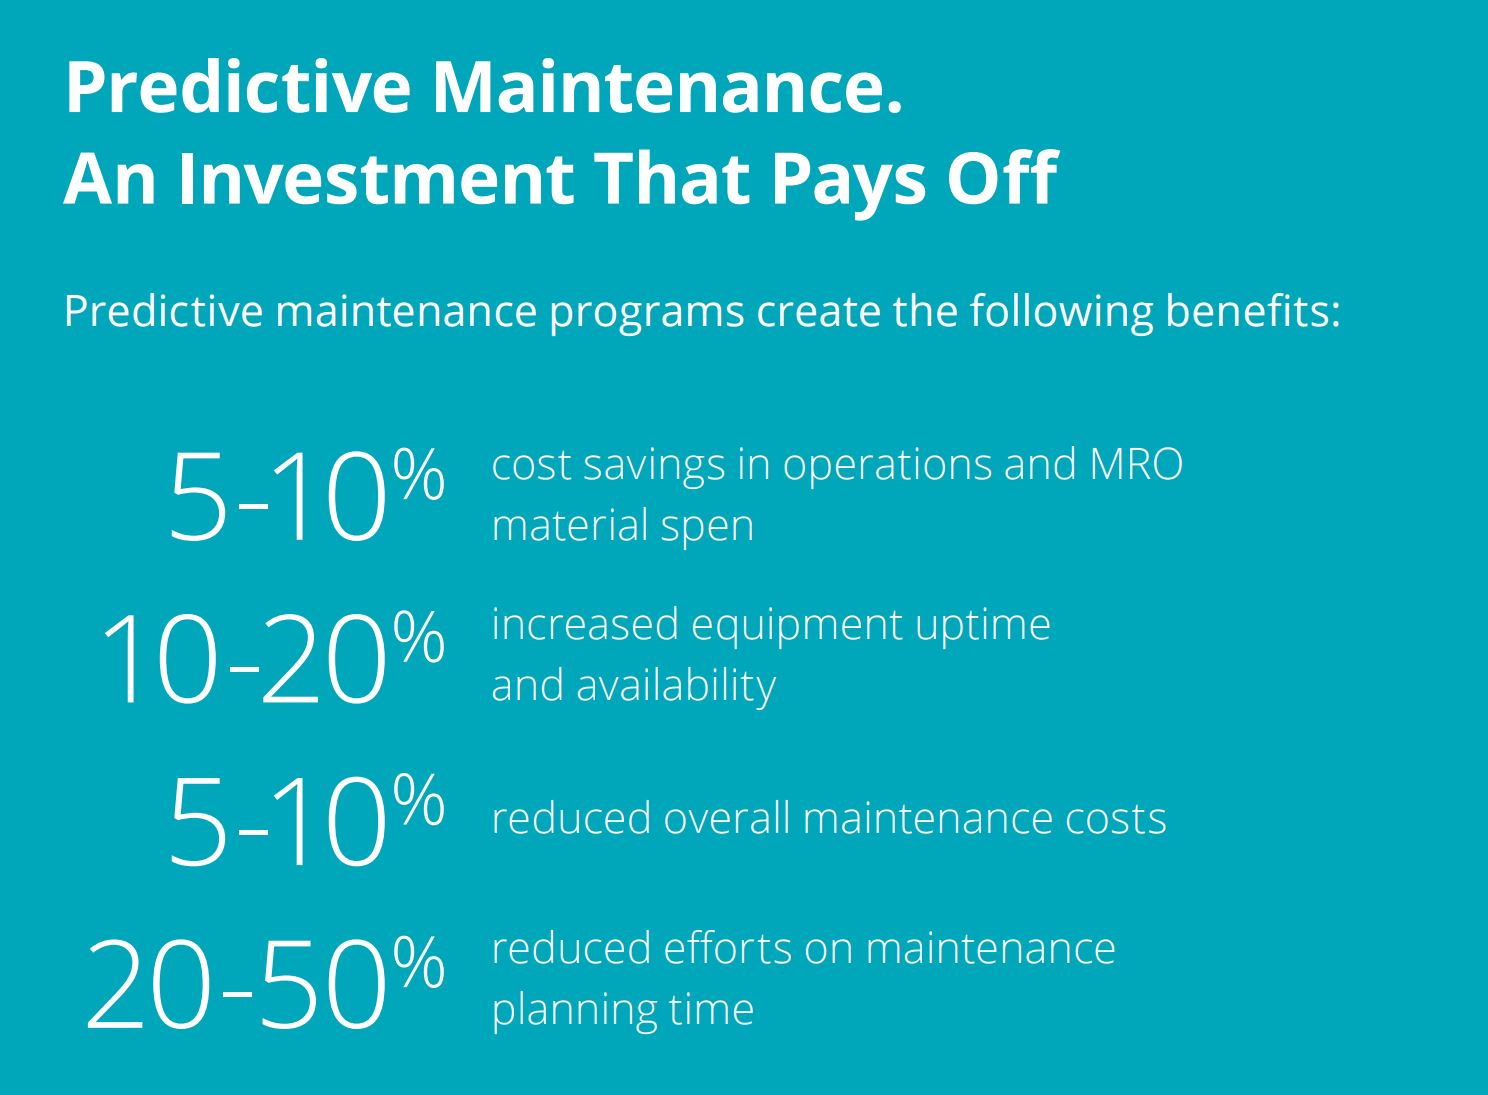 Deloitte analyse der viser hvor effektivt predictive maintenance er